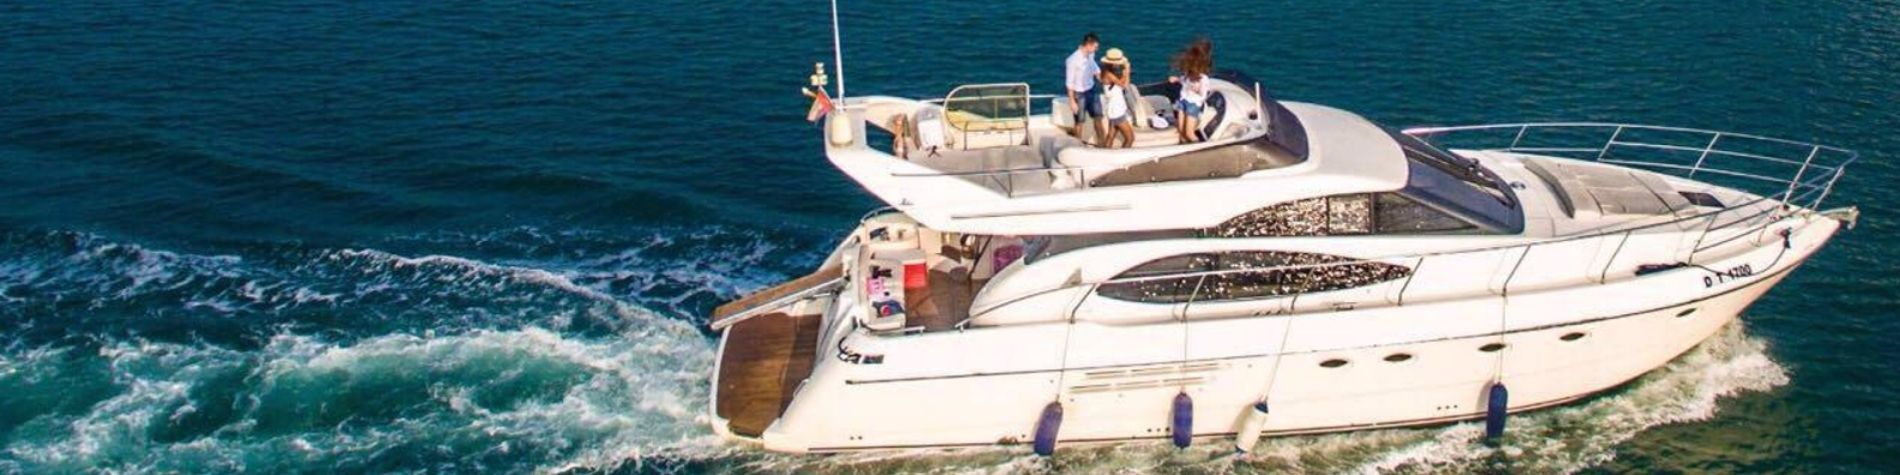 Azimut 52 FT Yacht in Dubai